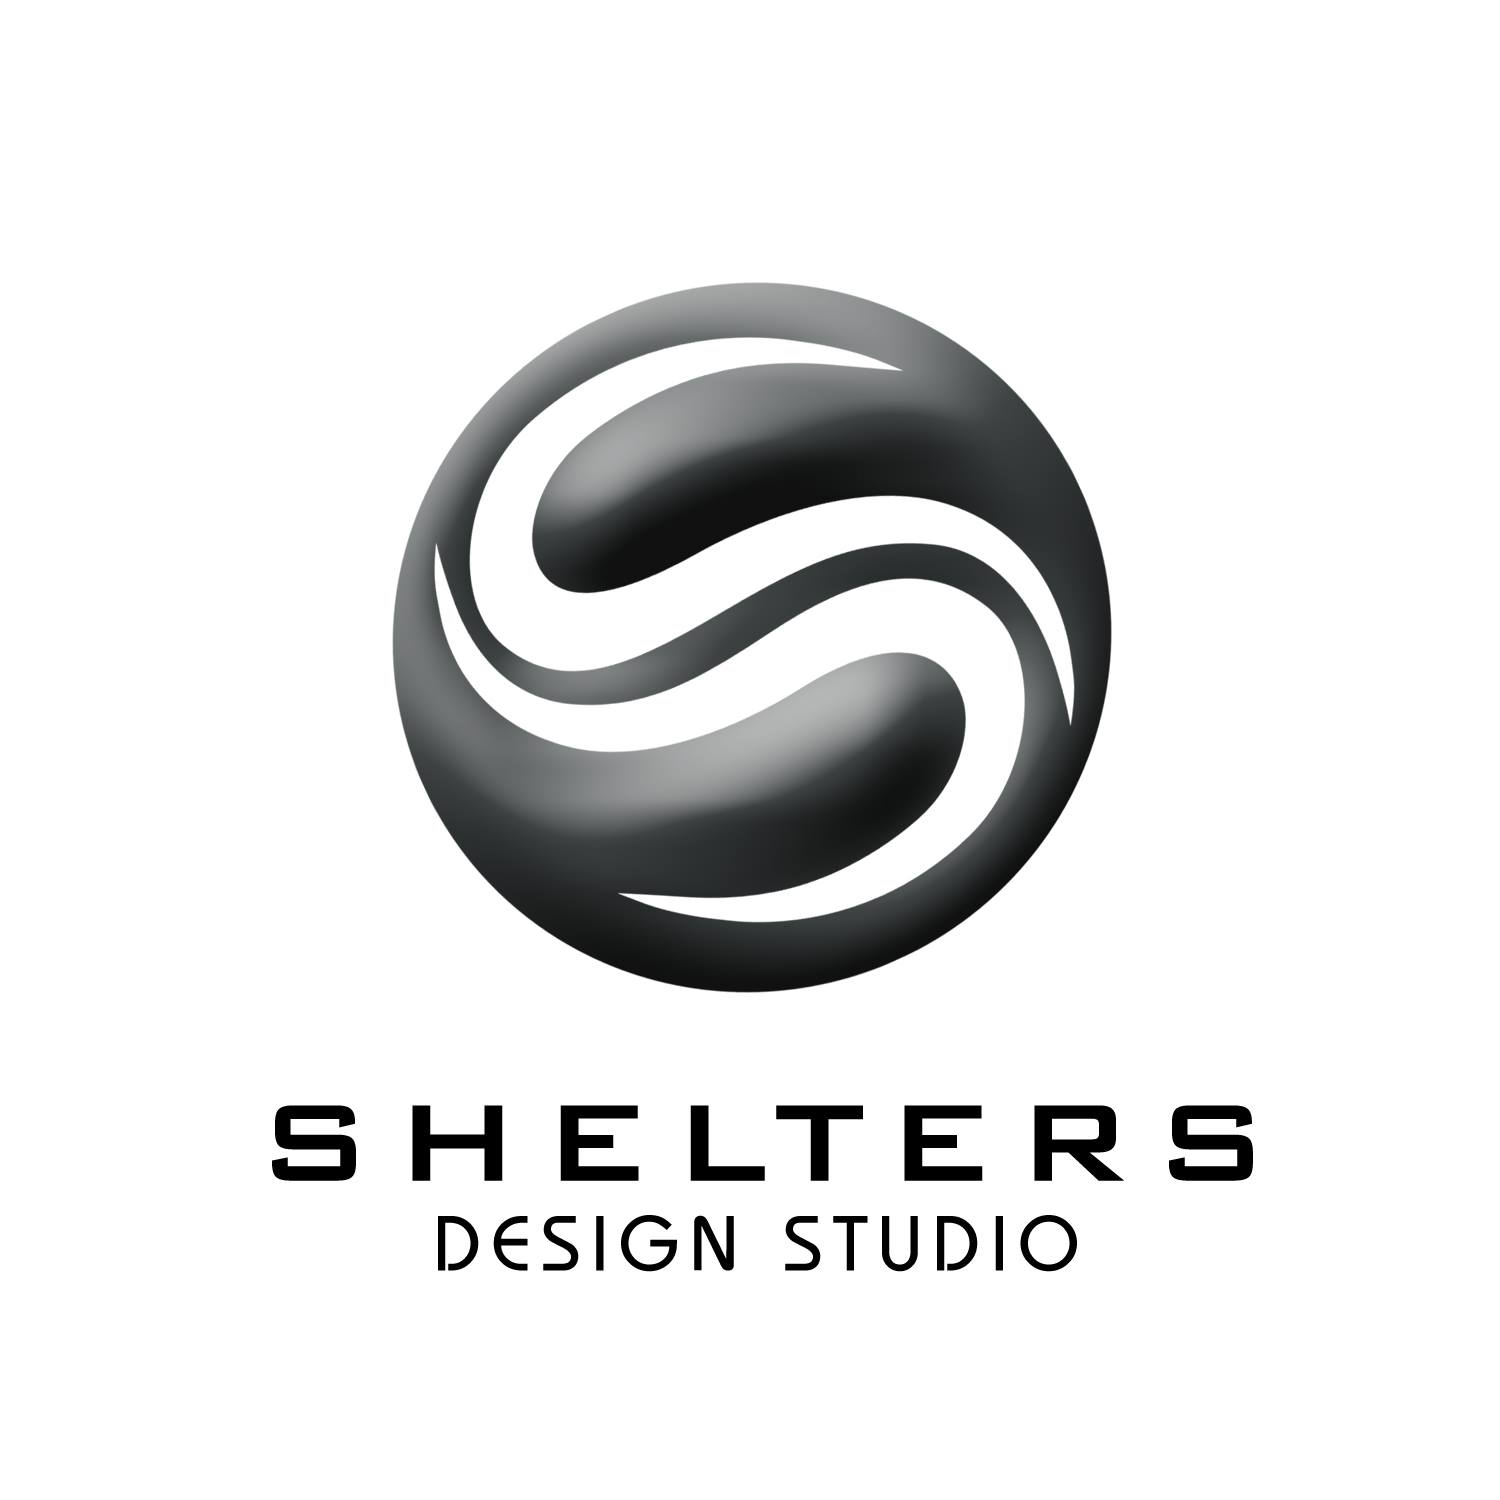 Shelters Design Studio|Legal Services|Professional Services